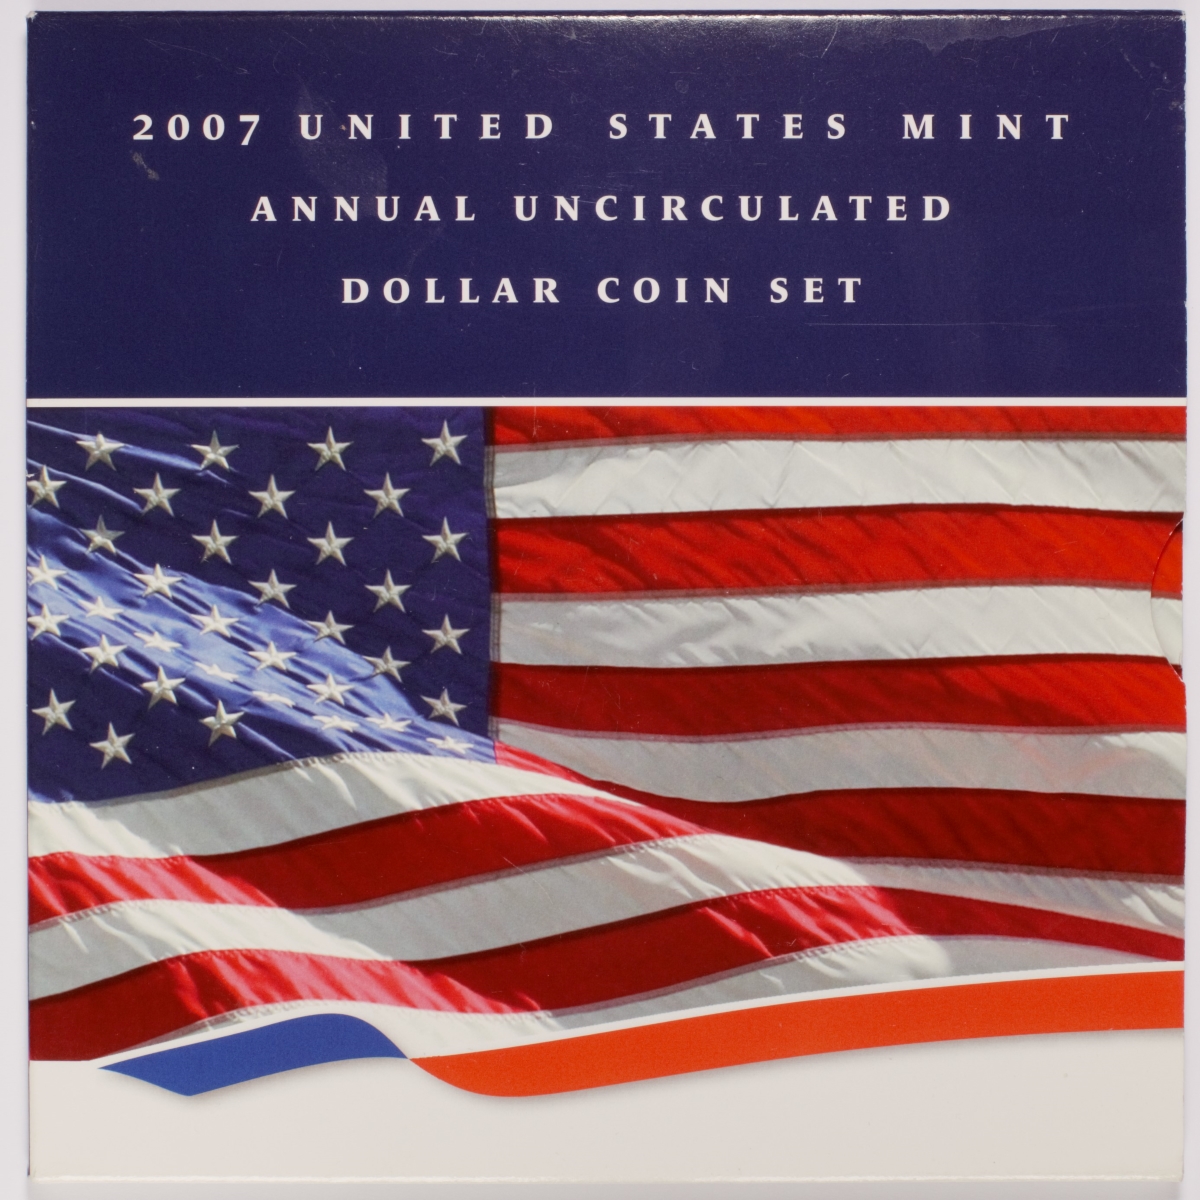 2007-annual-uncirculated-dollar-coin-set-numismax